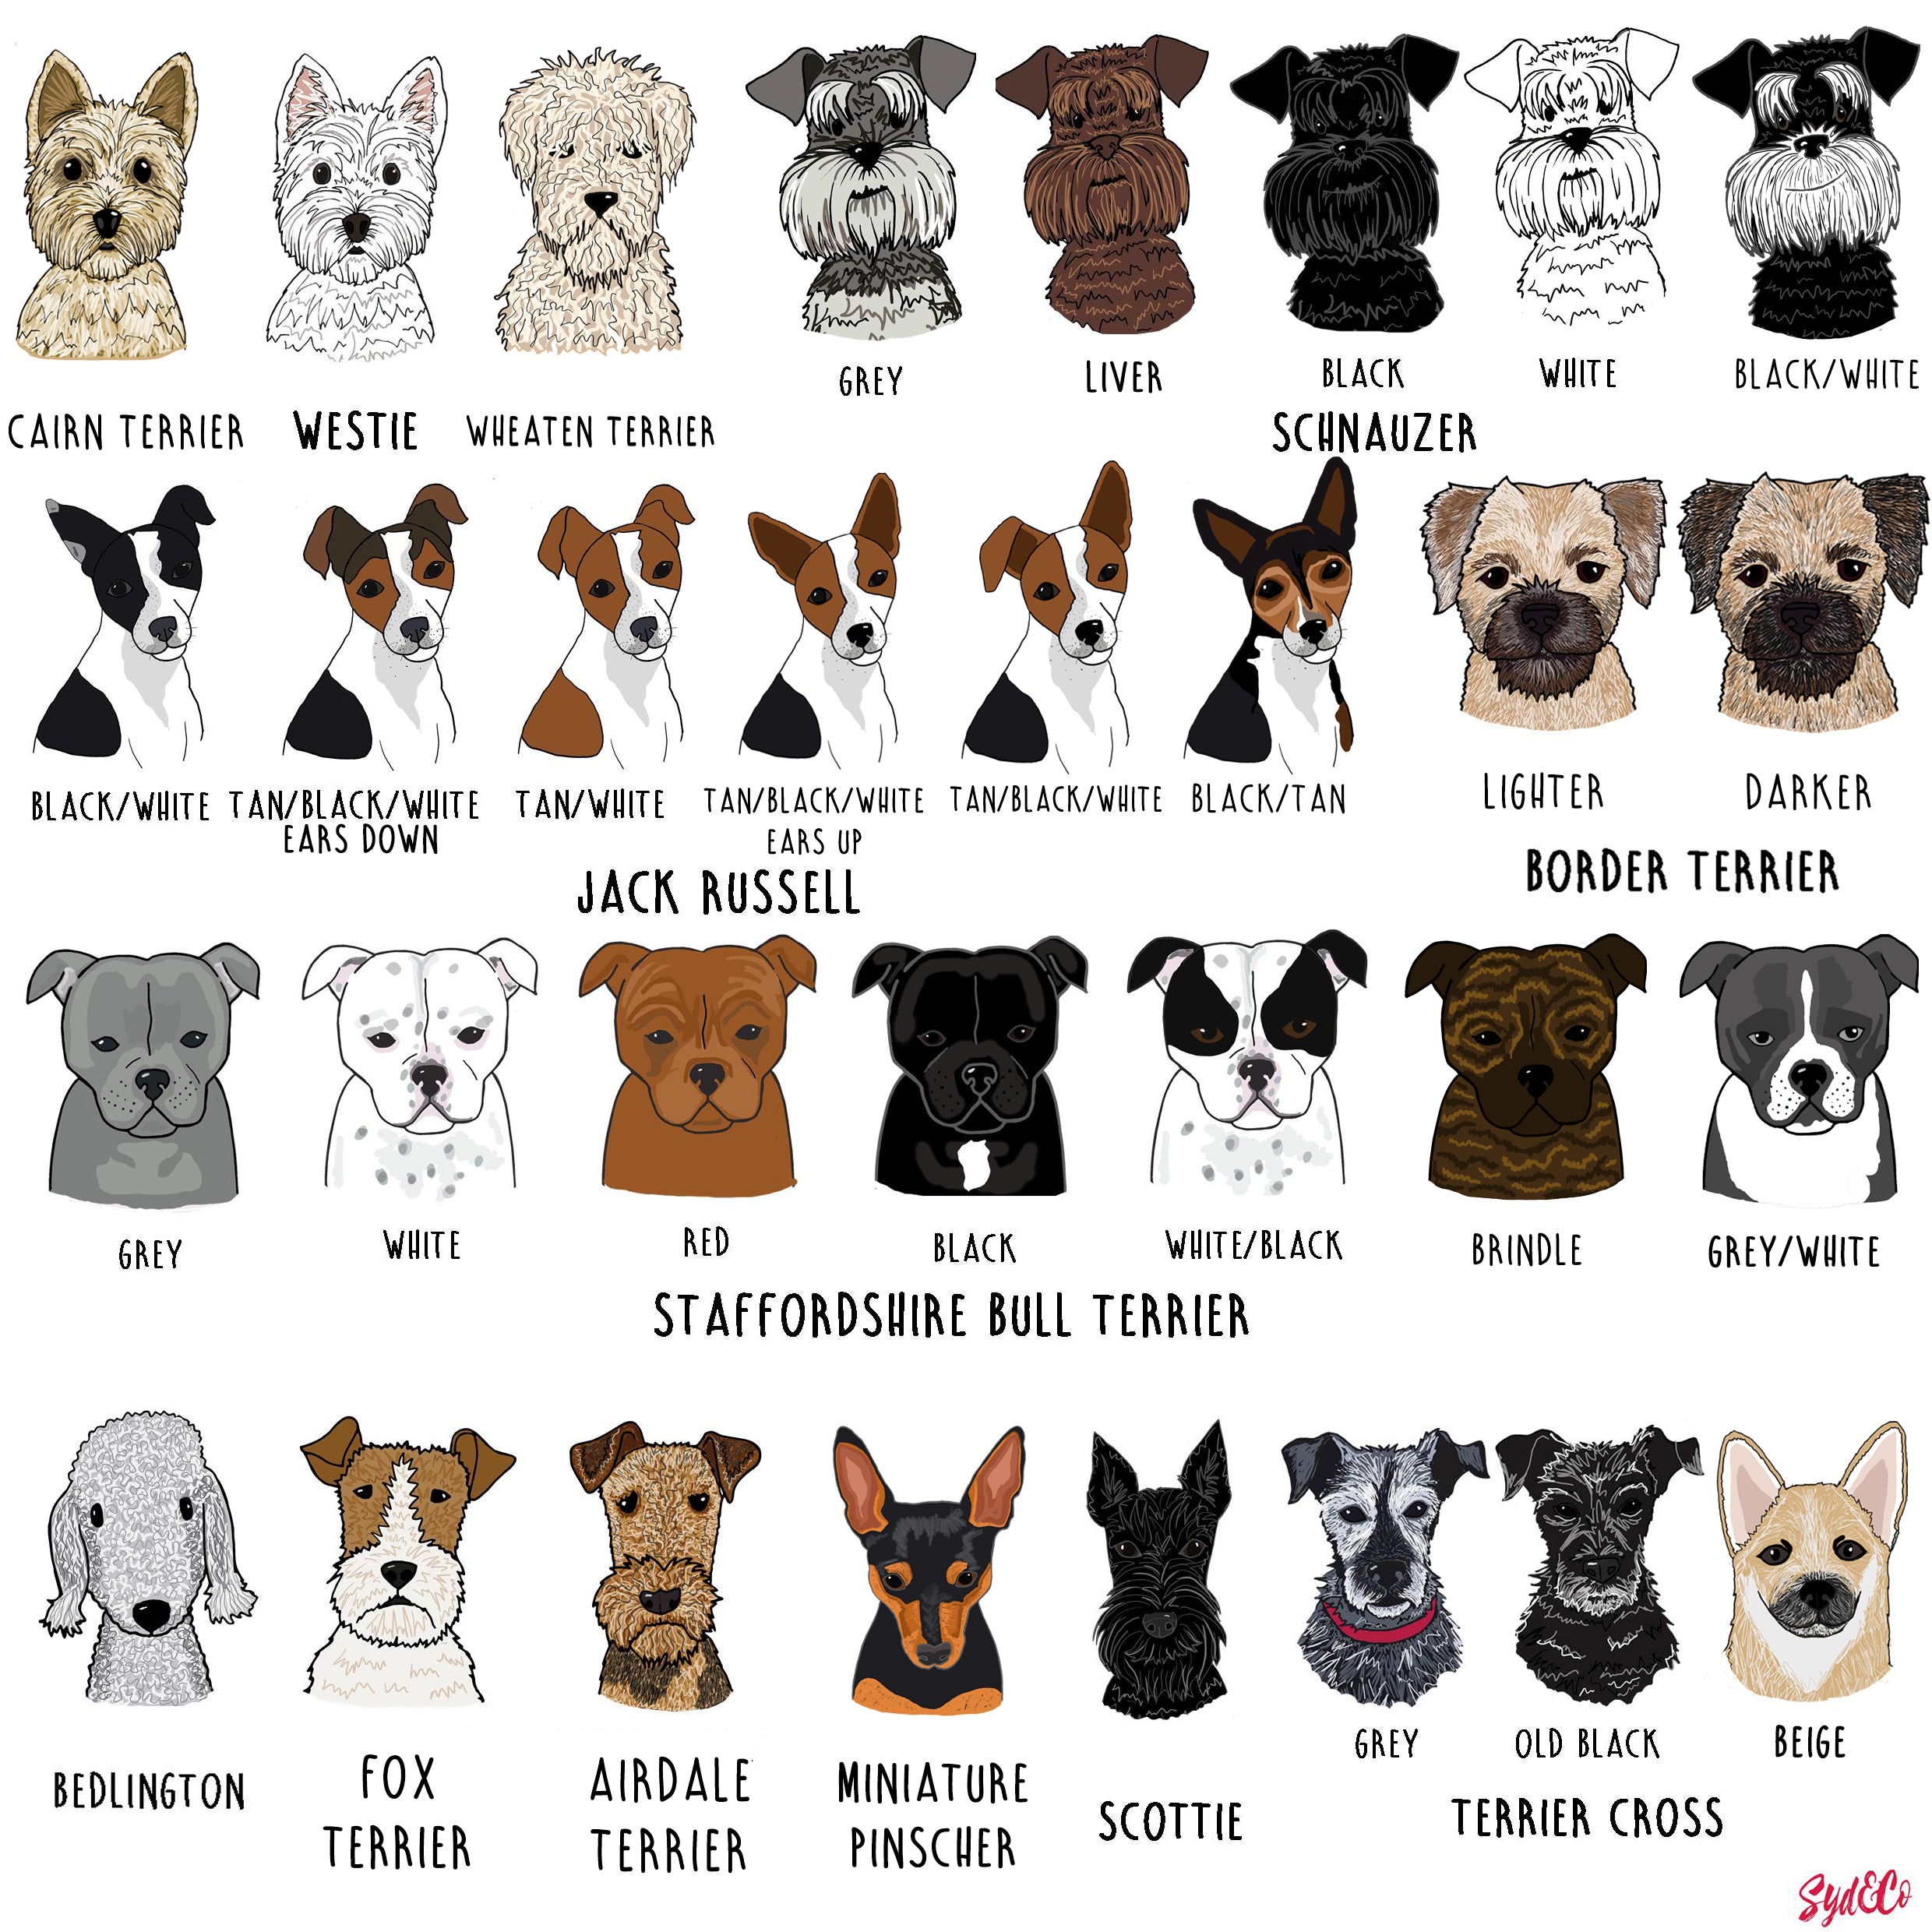 Personalised Dog Motif Sweatshirt